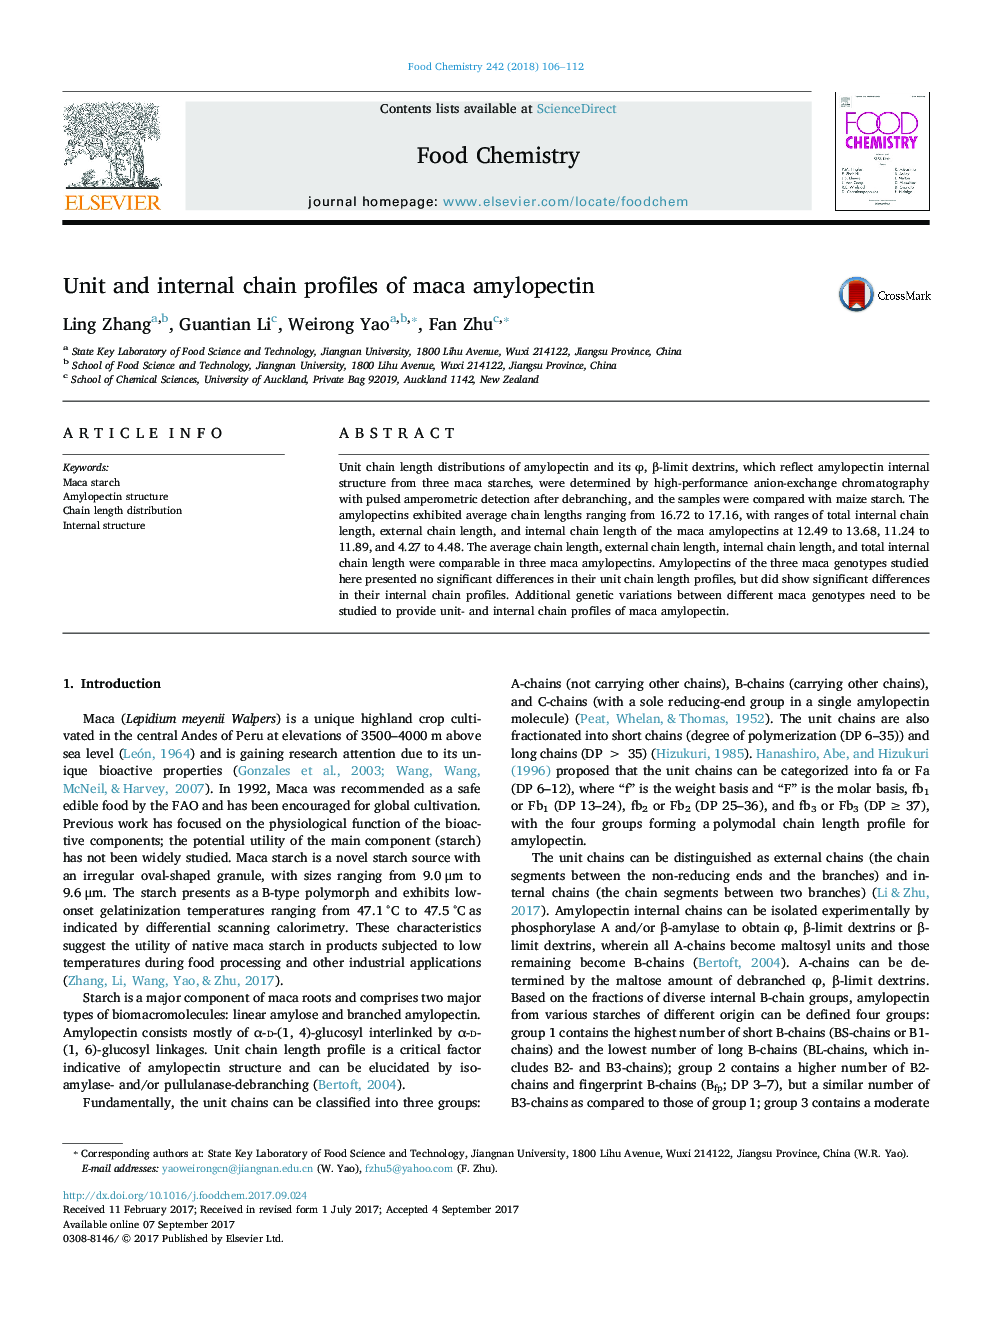 Unit and internal chain profiles of maca amylopectin